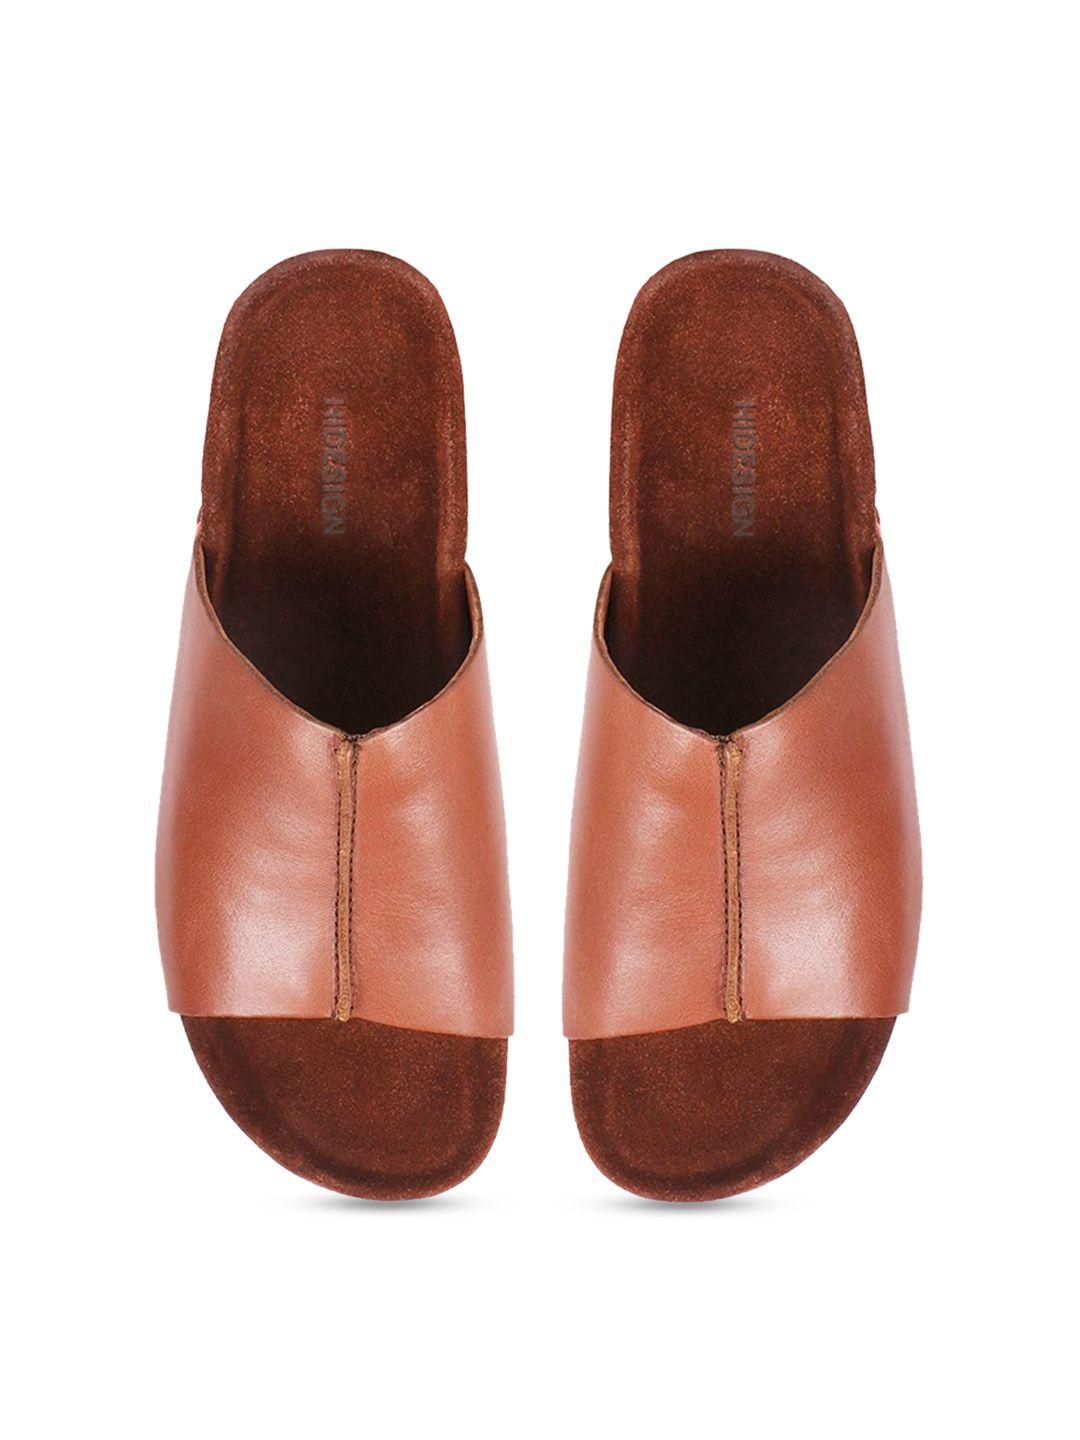 hidesign cancun leather open toe flats